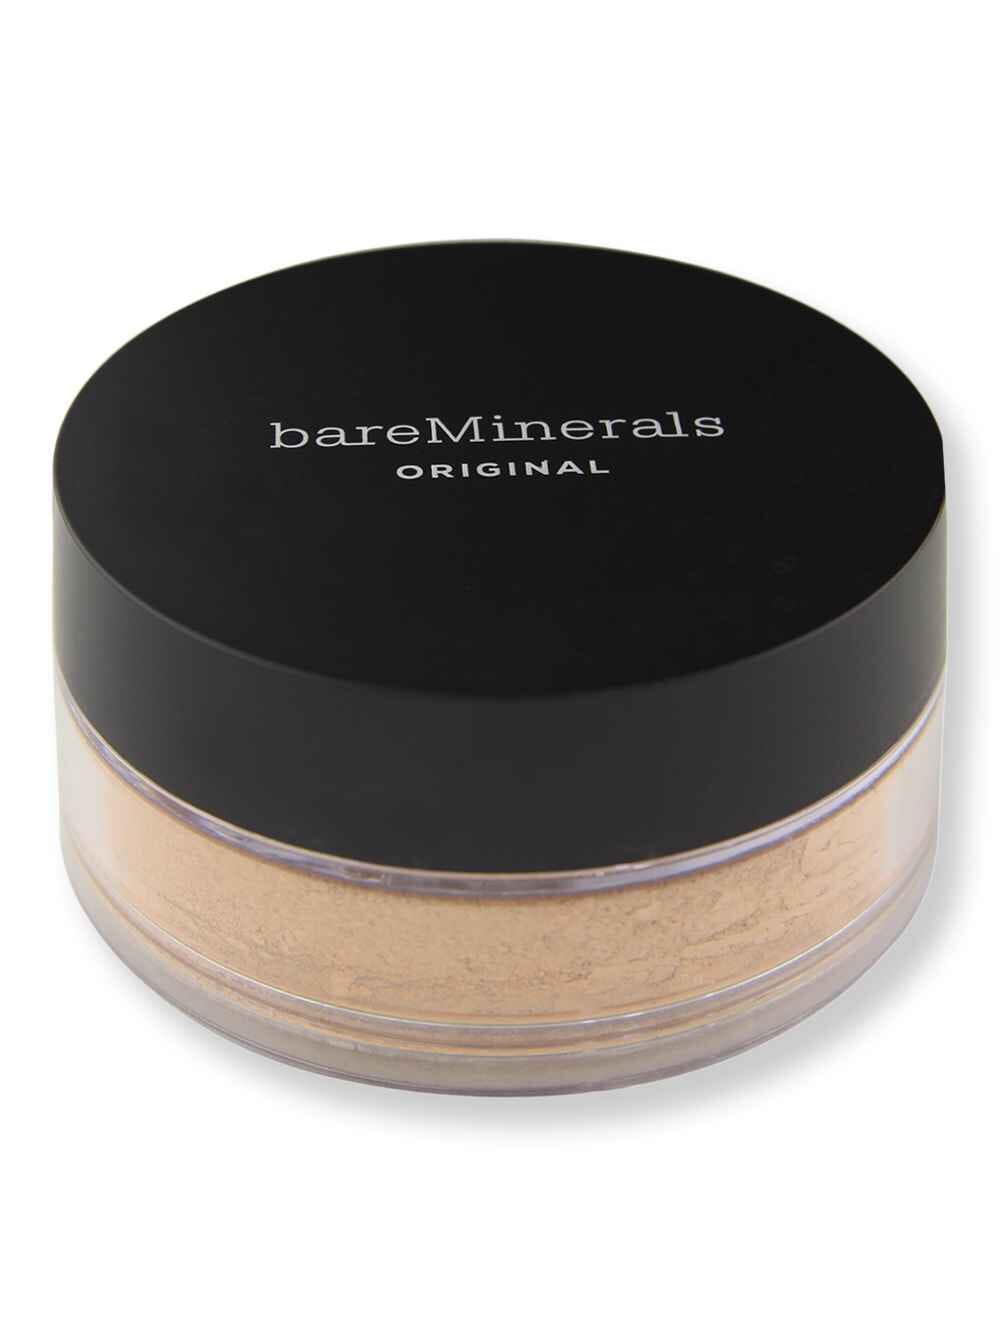 Bareminerals Bareminerals Original Loose Powder Foundation SPF 15 Neutral Tan 21 0.28 oz8 g Tinted Moisturizers & Foundations 